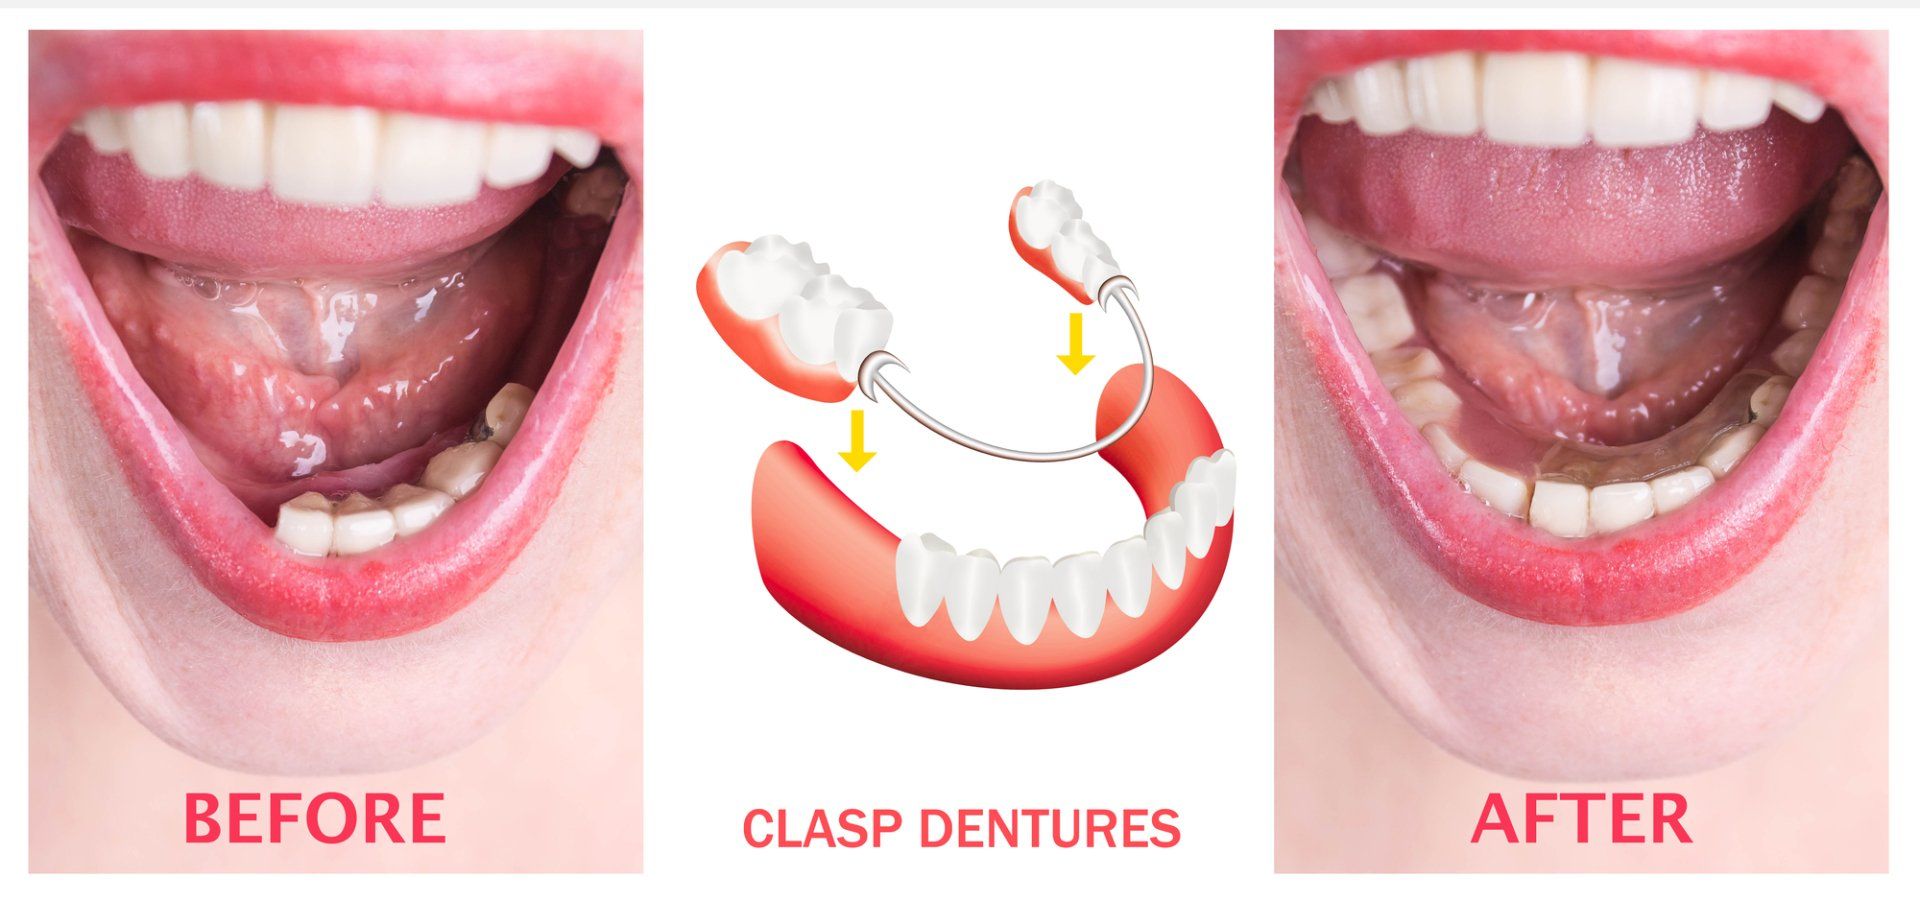 clasp dentures; a type of partial denture